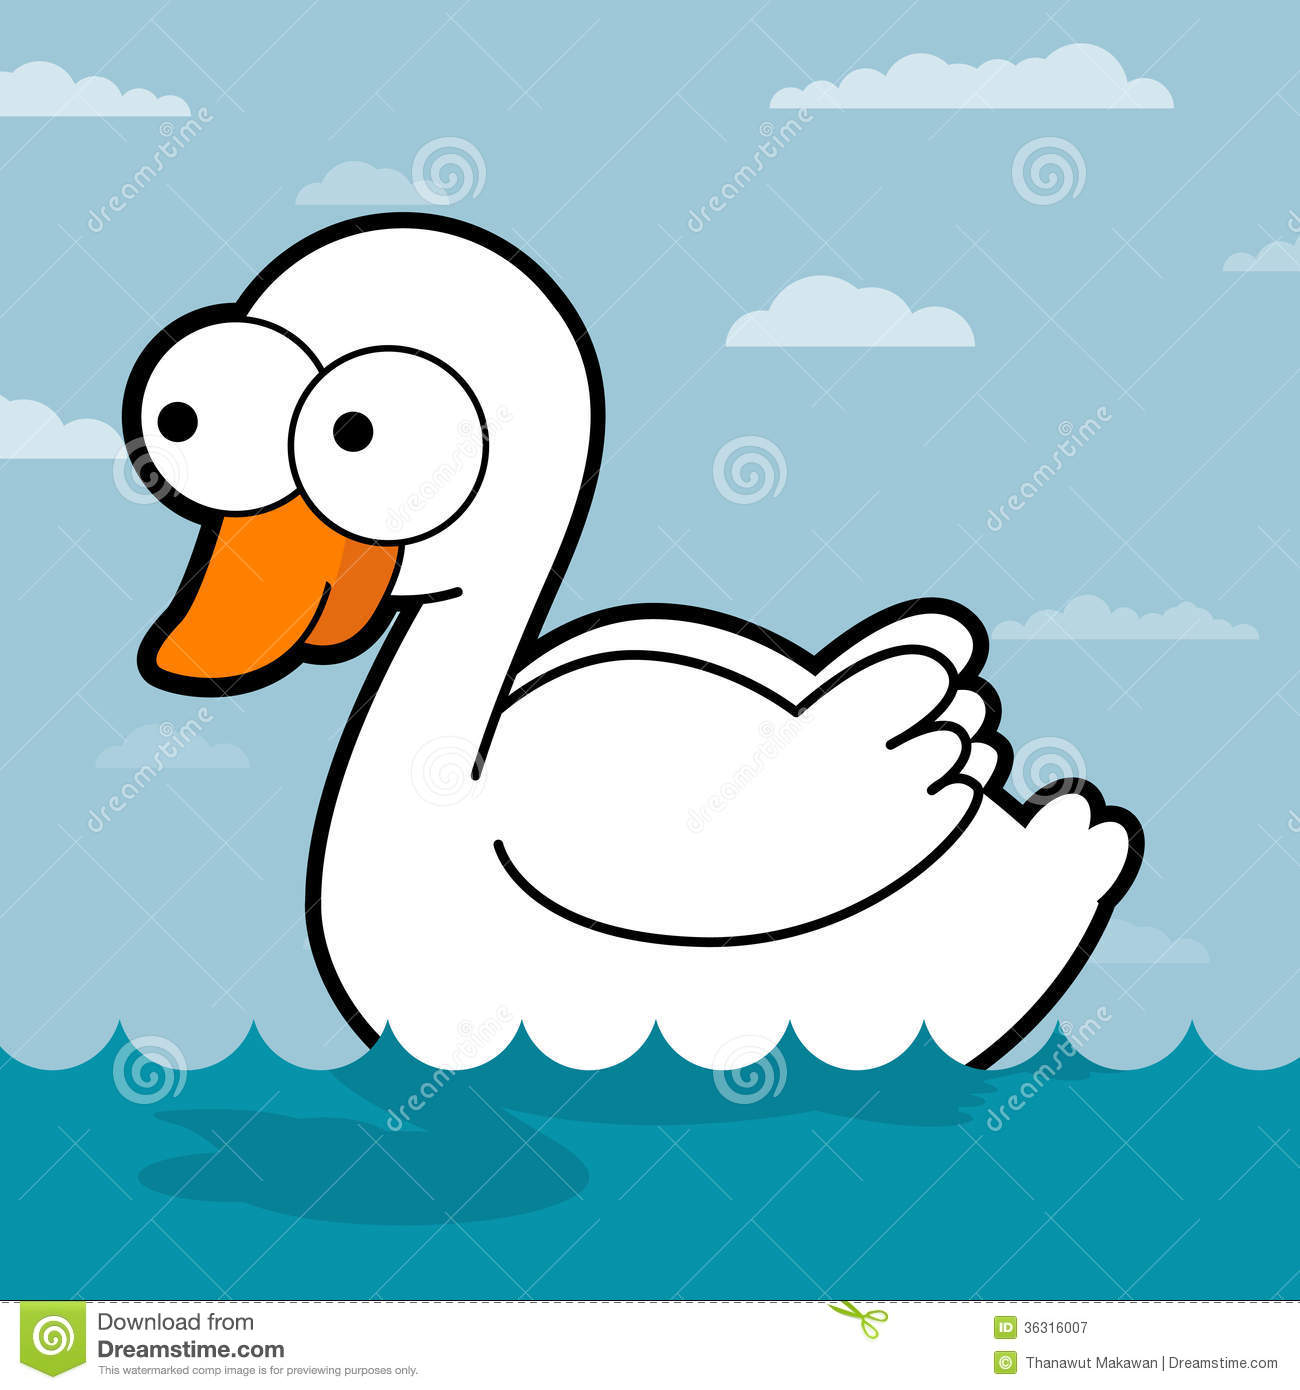 Swan child clipart - Clipground